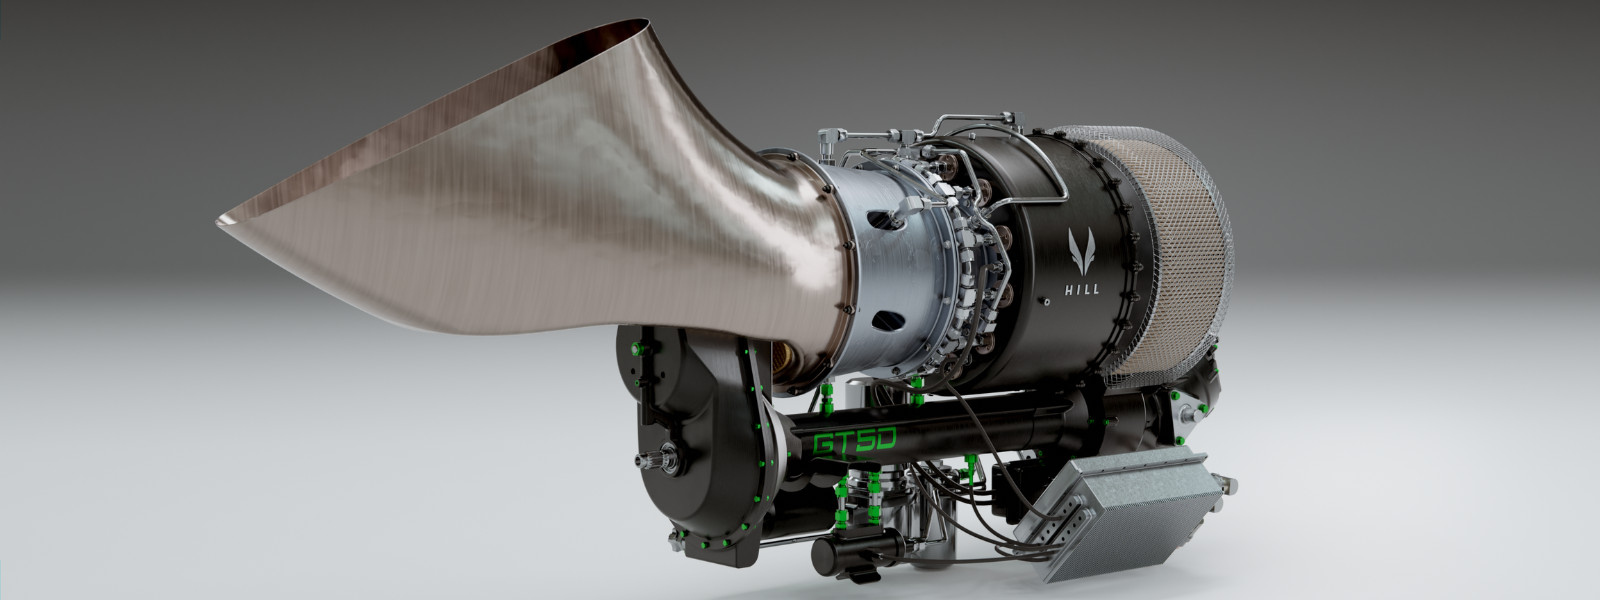 Collaborative Innovation. The GT50 turboshaft engi...